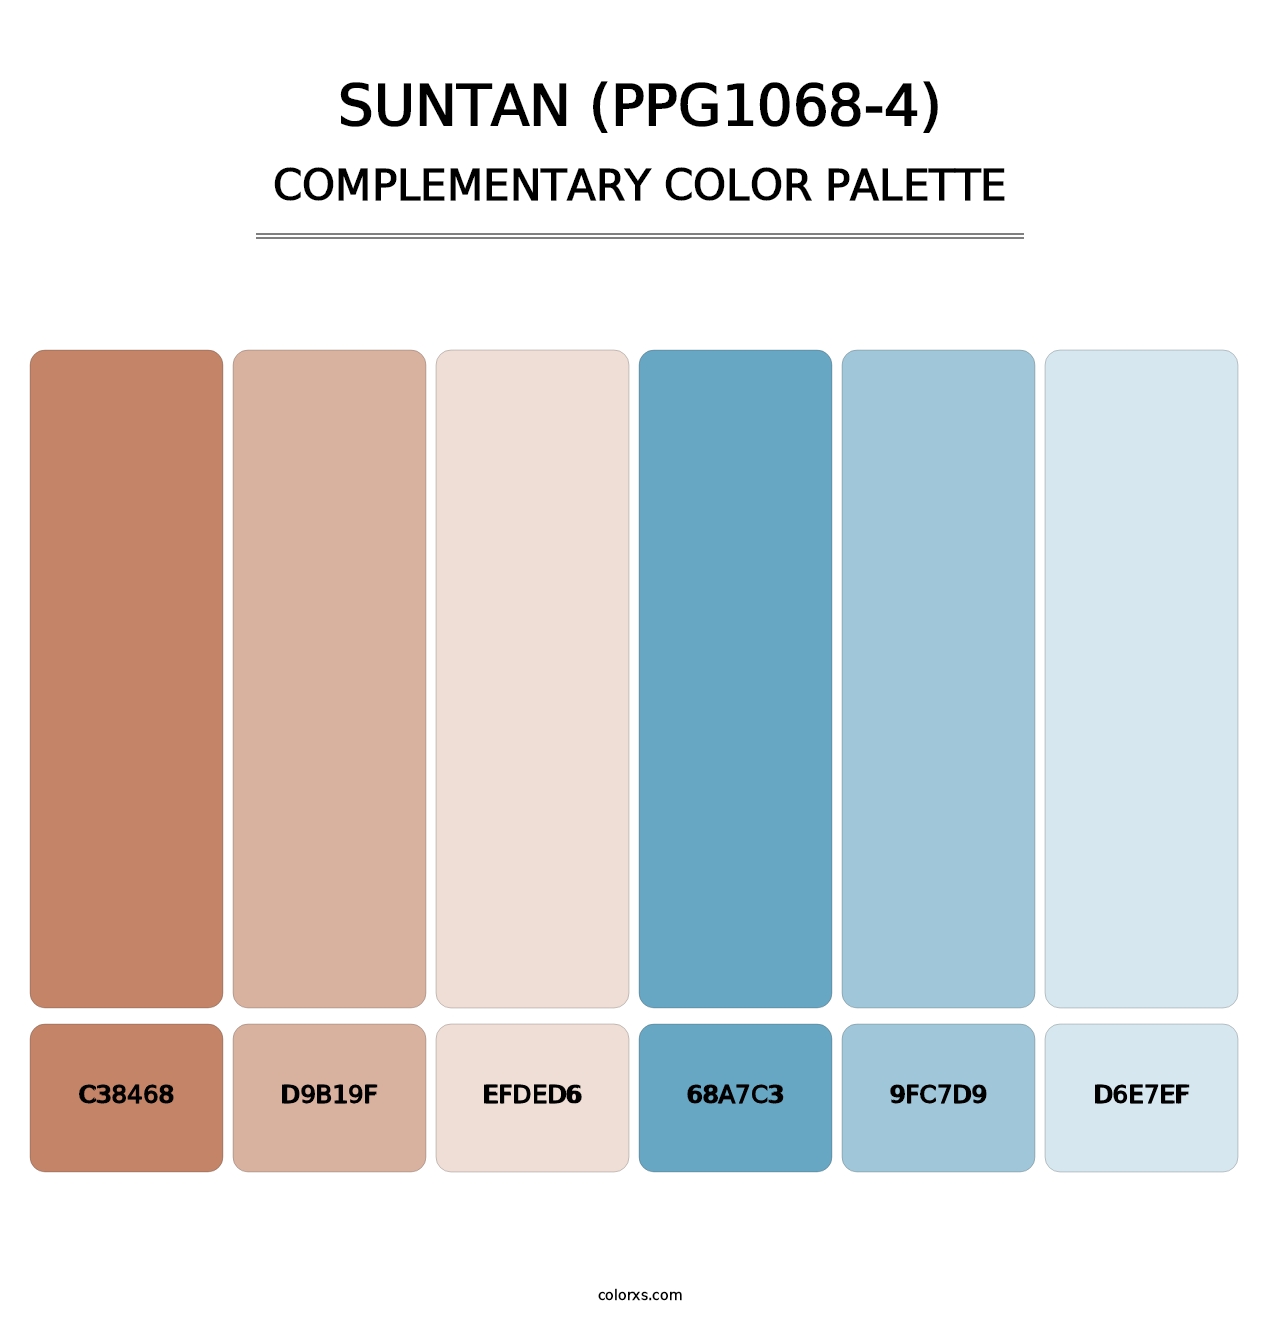 Suntan (PPG1068-4) - Complementary Color Palette